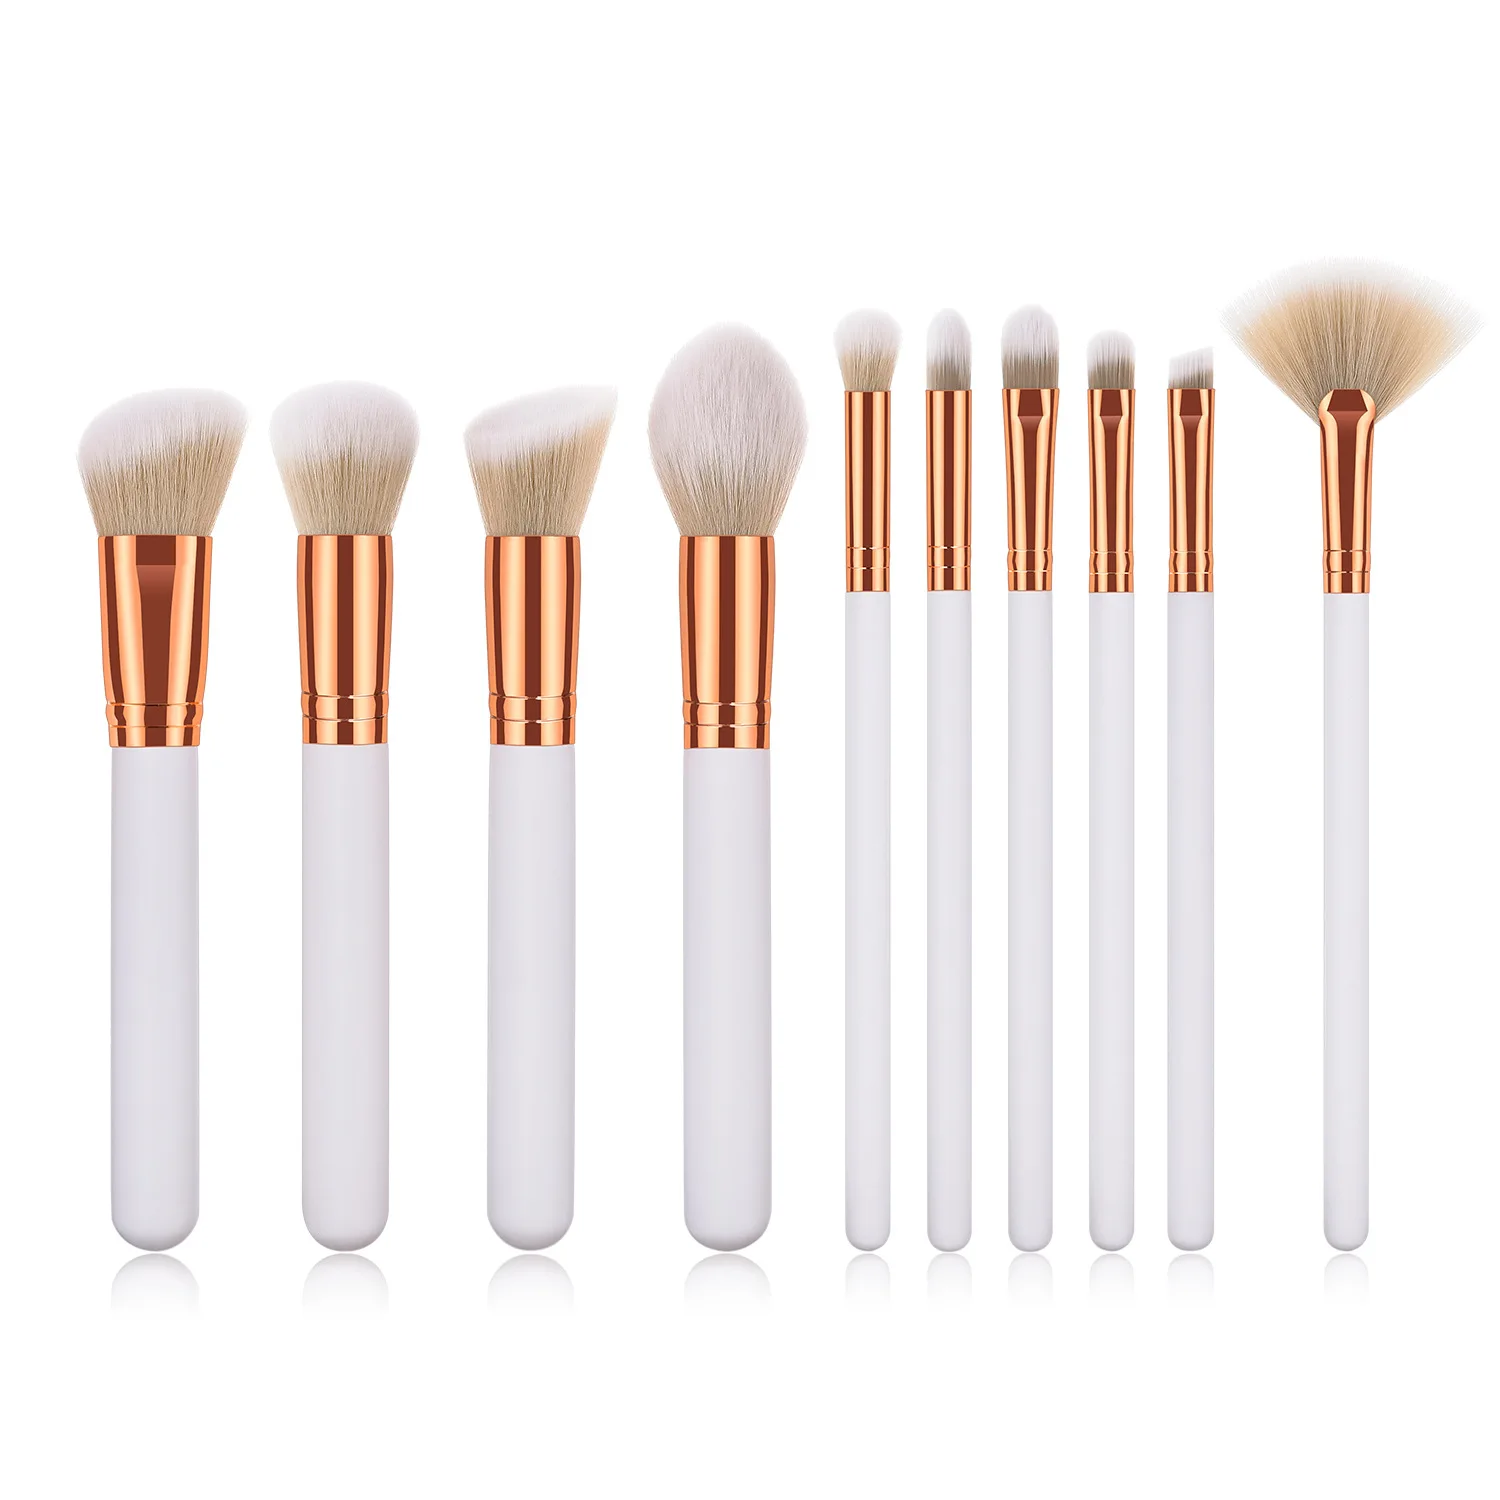 Makeup brushes set White/Gold Professional with Natural Hair Foundation Powder Eyeshadow Make up Brush Blush 10pcs